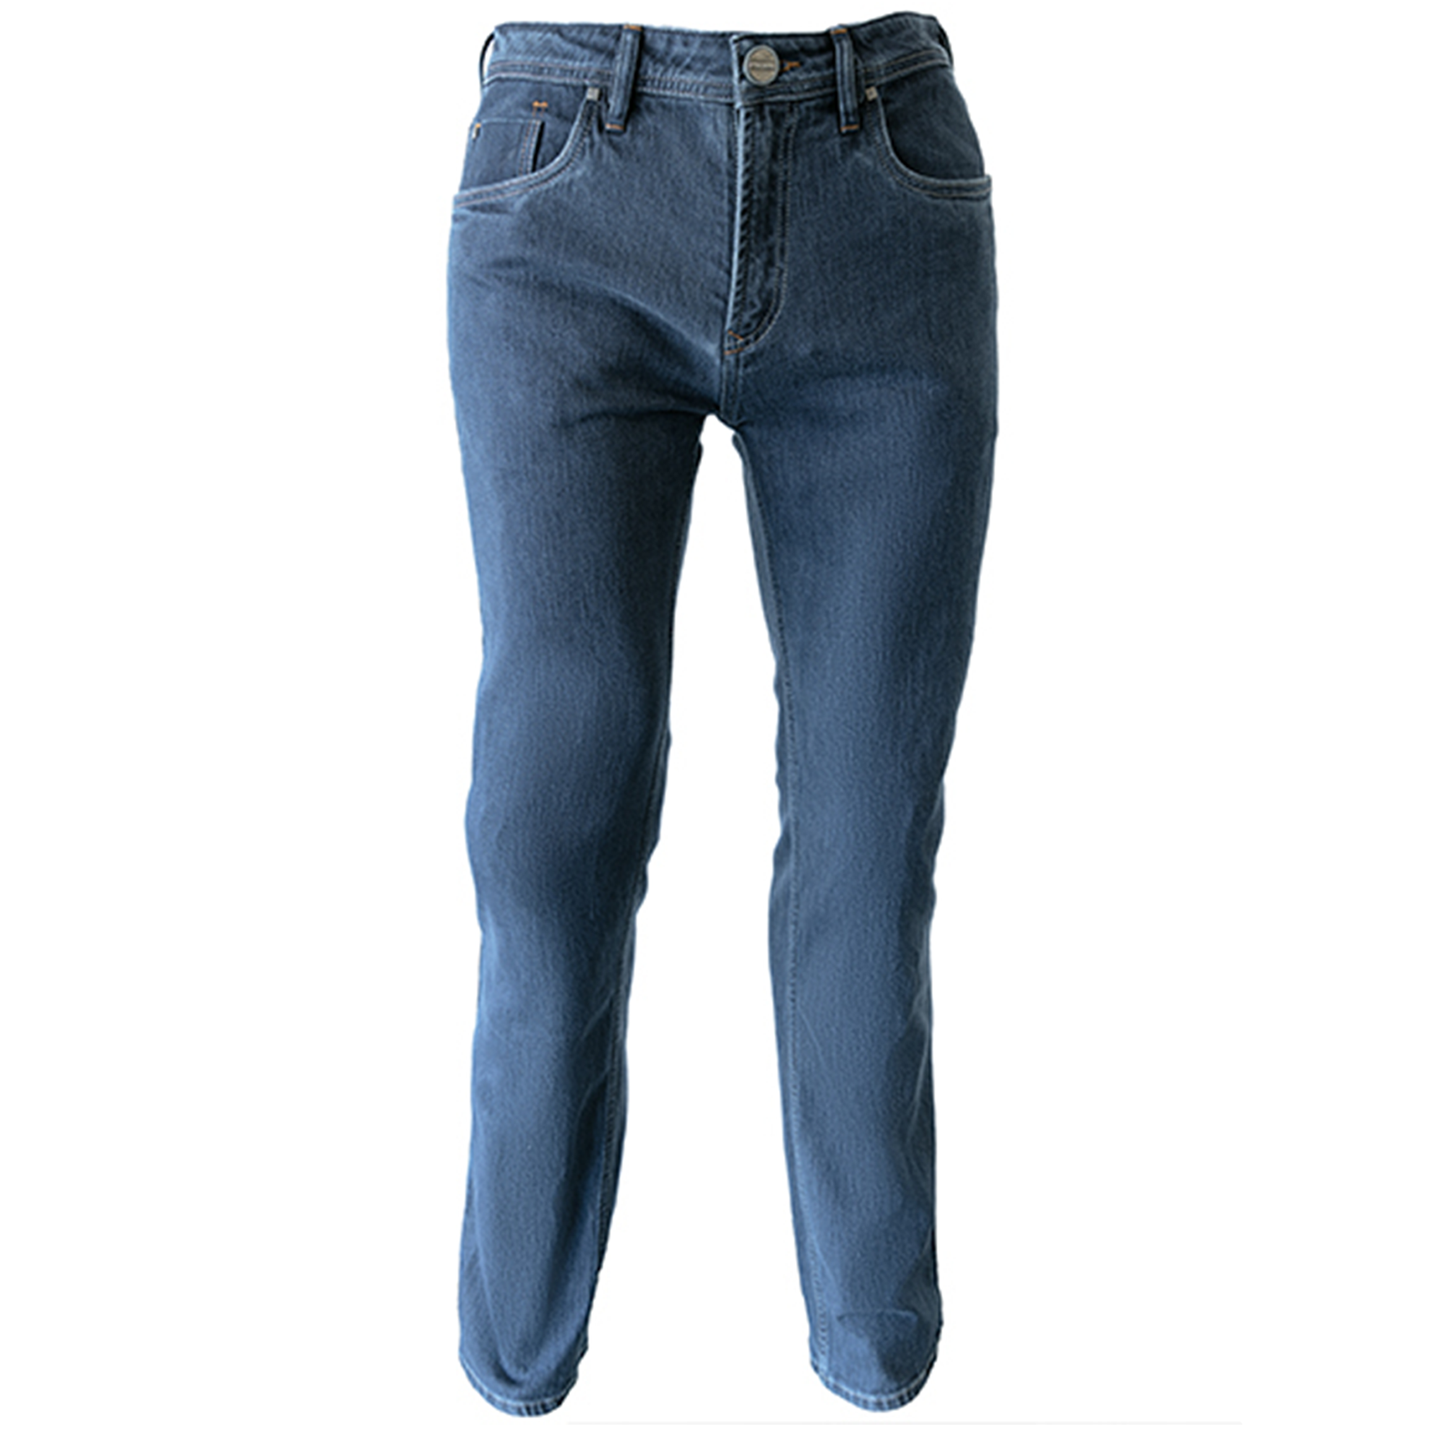 Richa Carter Short Jeans - Stone Wash